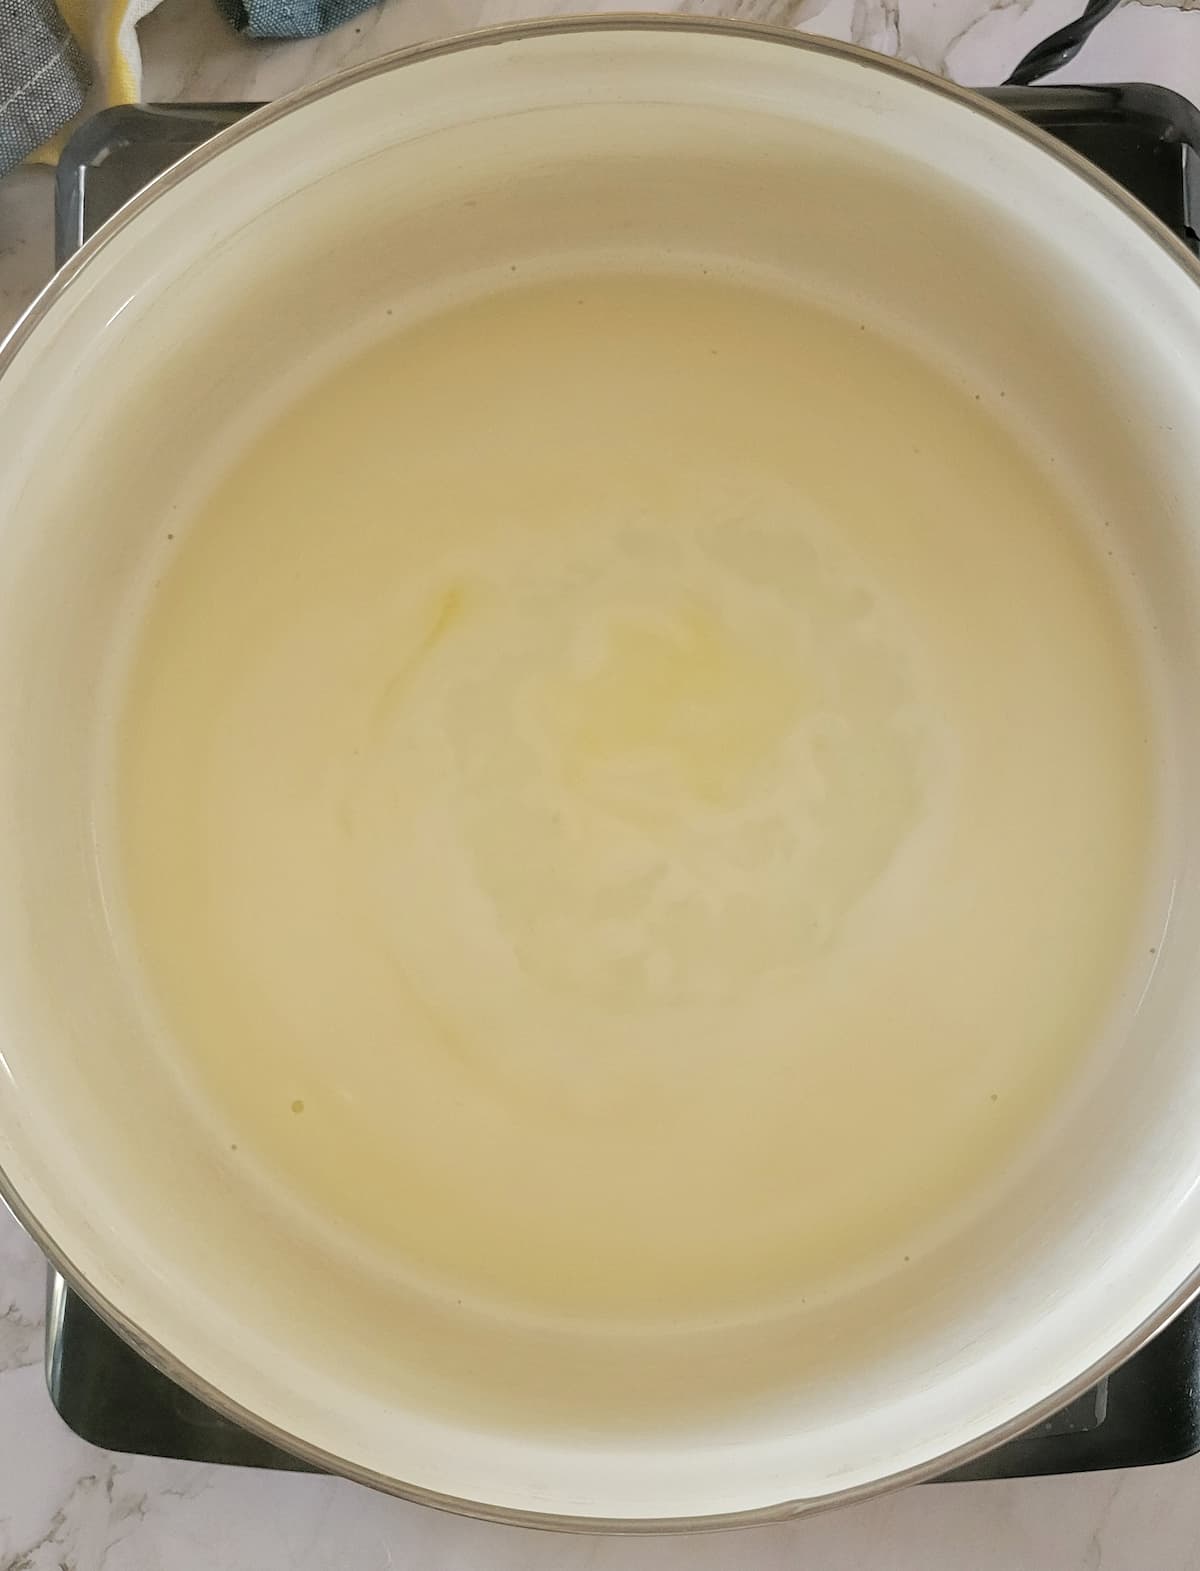 milk simmering in a pot on a burner